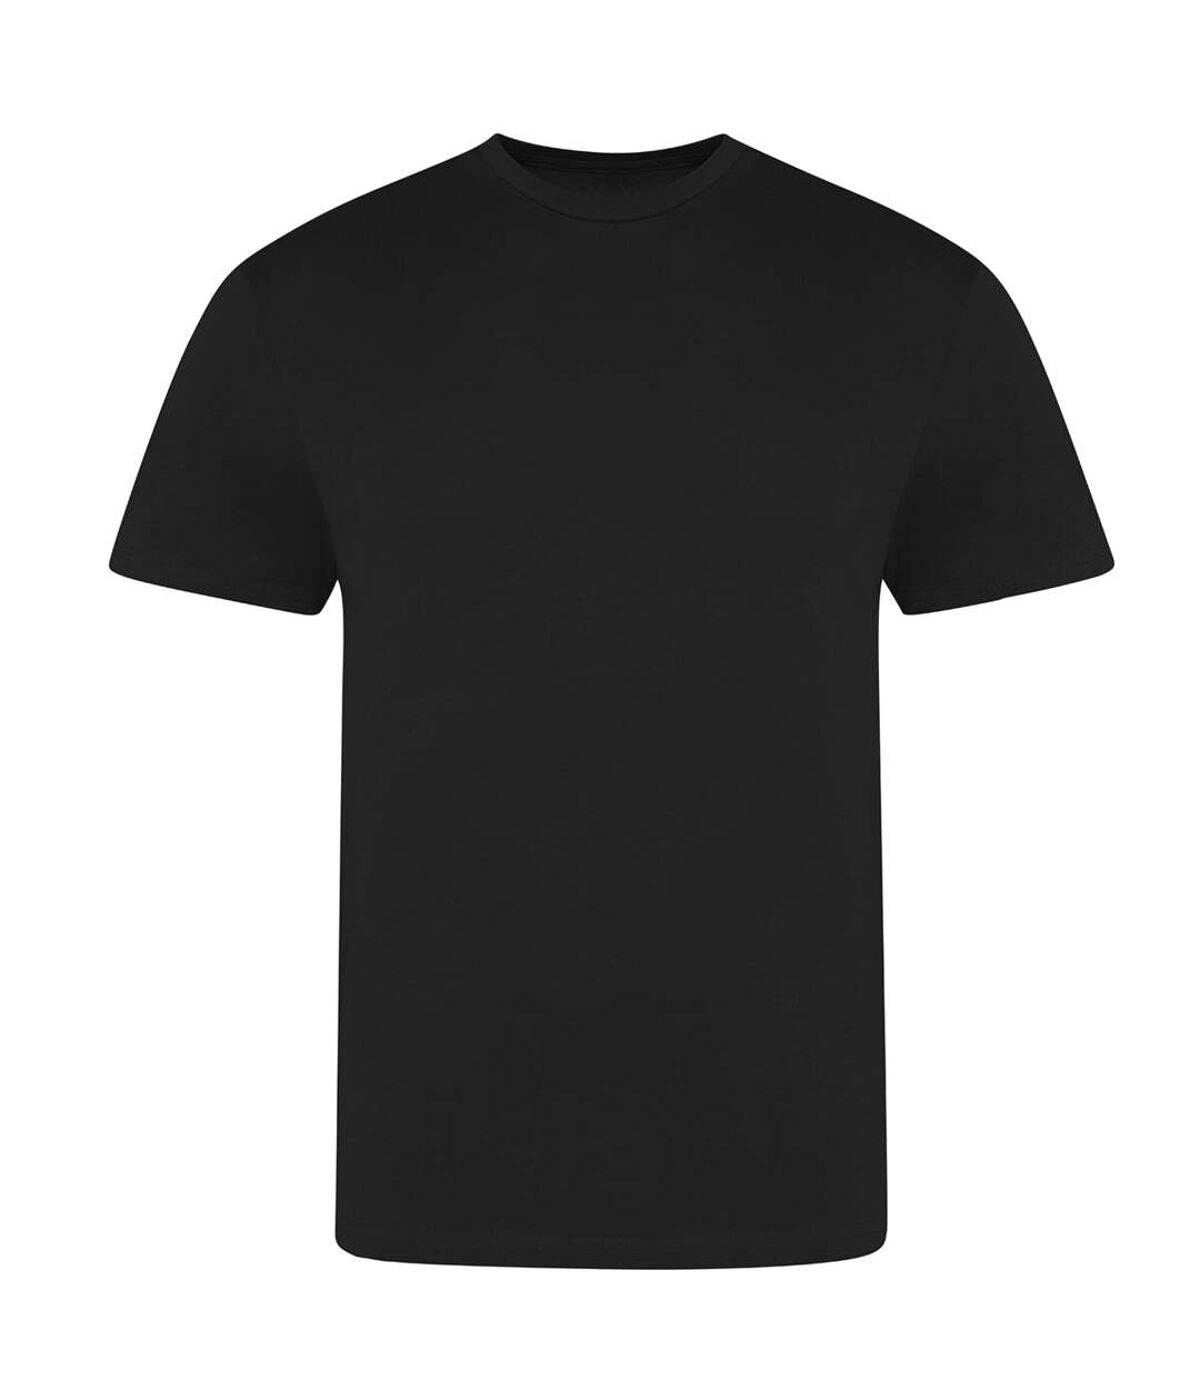 Awdis T-Shirt unisexe adulte The 100 (Noir profond) - UTRW7727